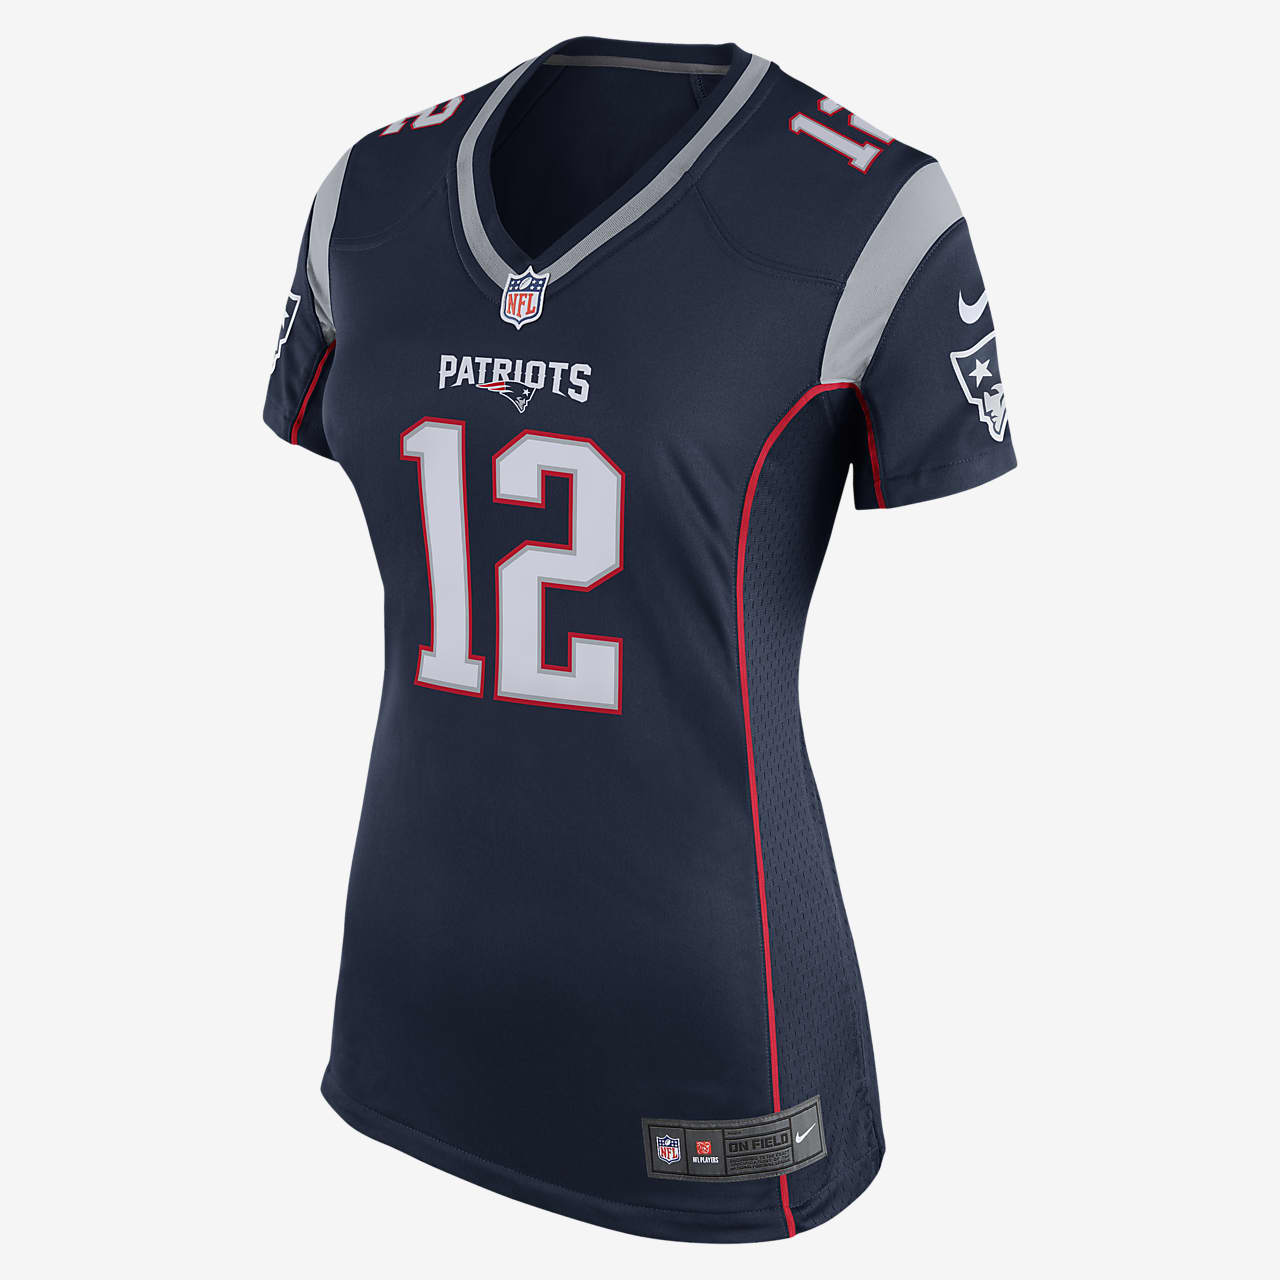 New England Patriots #12 Tom Brady Elite Rugby Jersey-American Football Uniform Adult Training Competition Uniform,Black,S